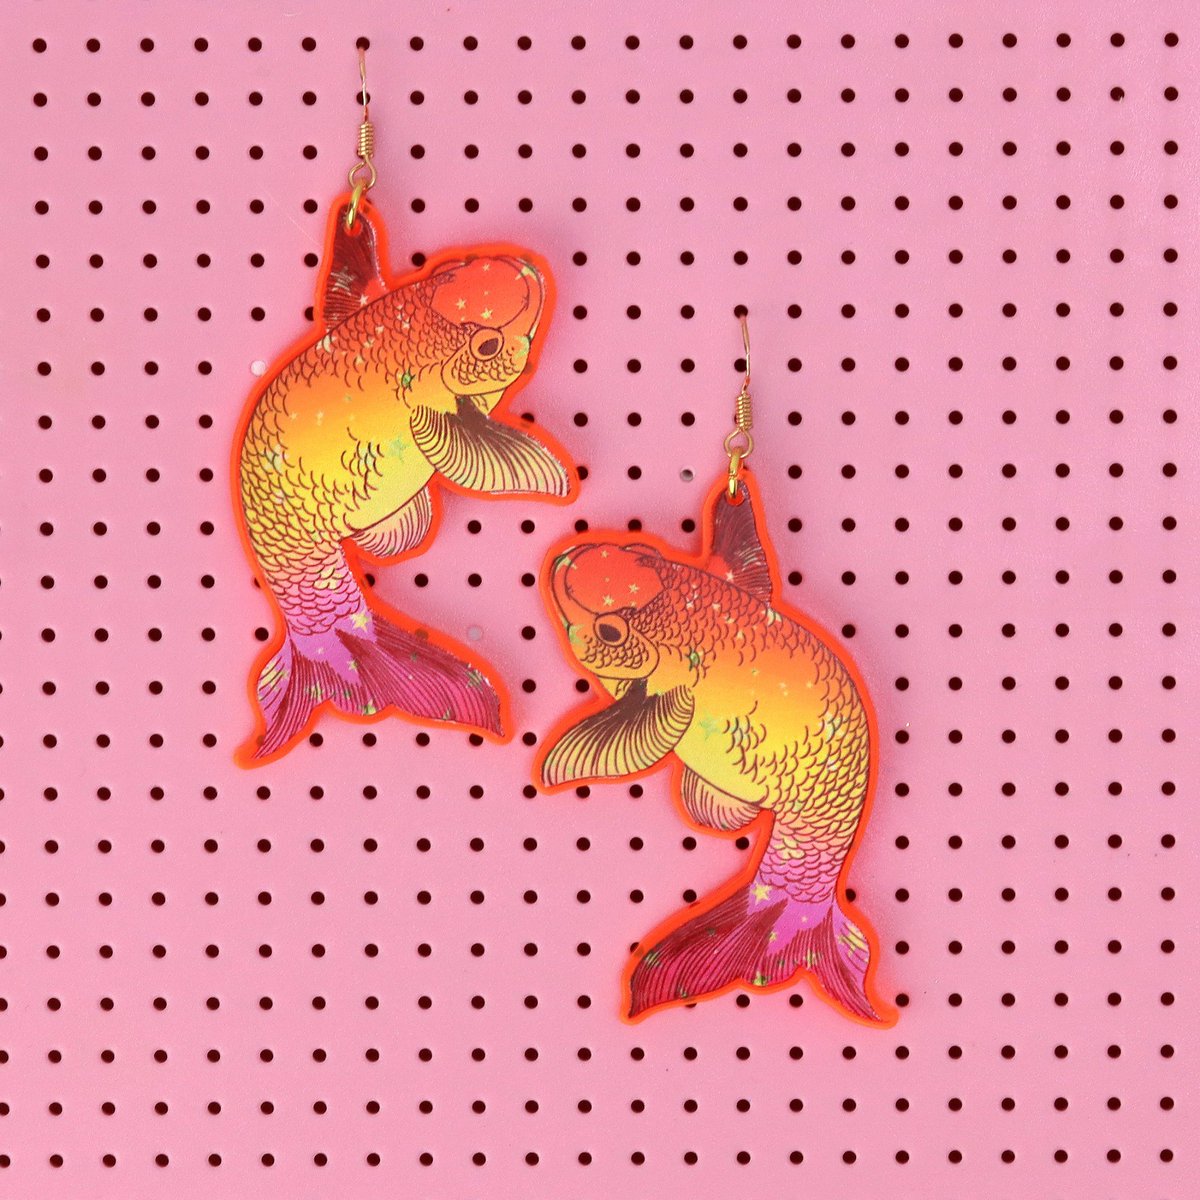 'These Acrylic Koi Fishes will look BEAUTIFUL dangling from your ears 😊🧡👍
#koifish #japanesekoi
#koifishart #magicalfish #fishbowl #funjewellery #cuteearrings  #indiebusiness #grungemonkey #visualartist #smallbusiness